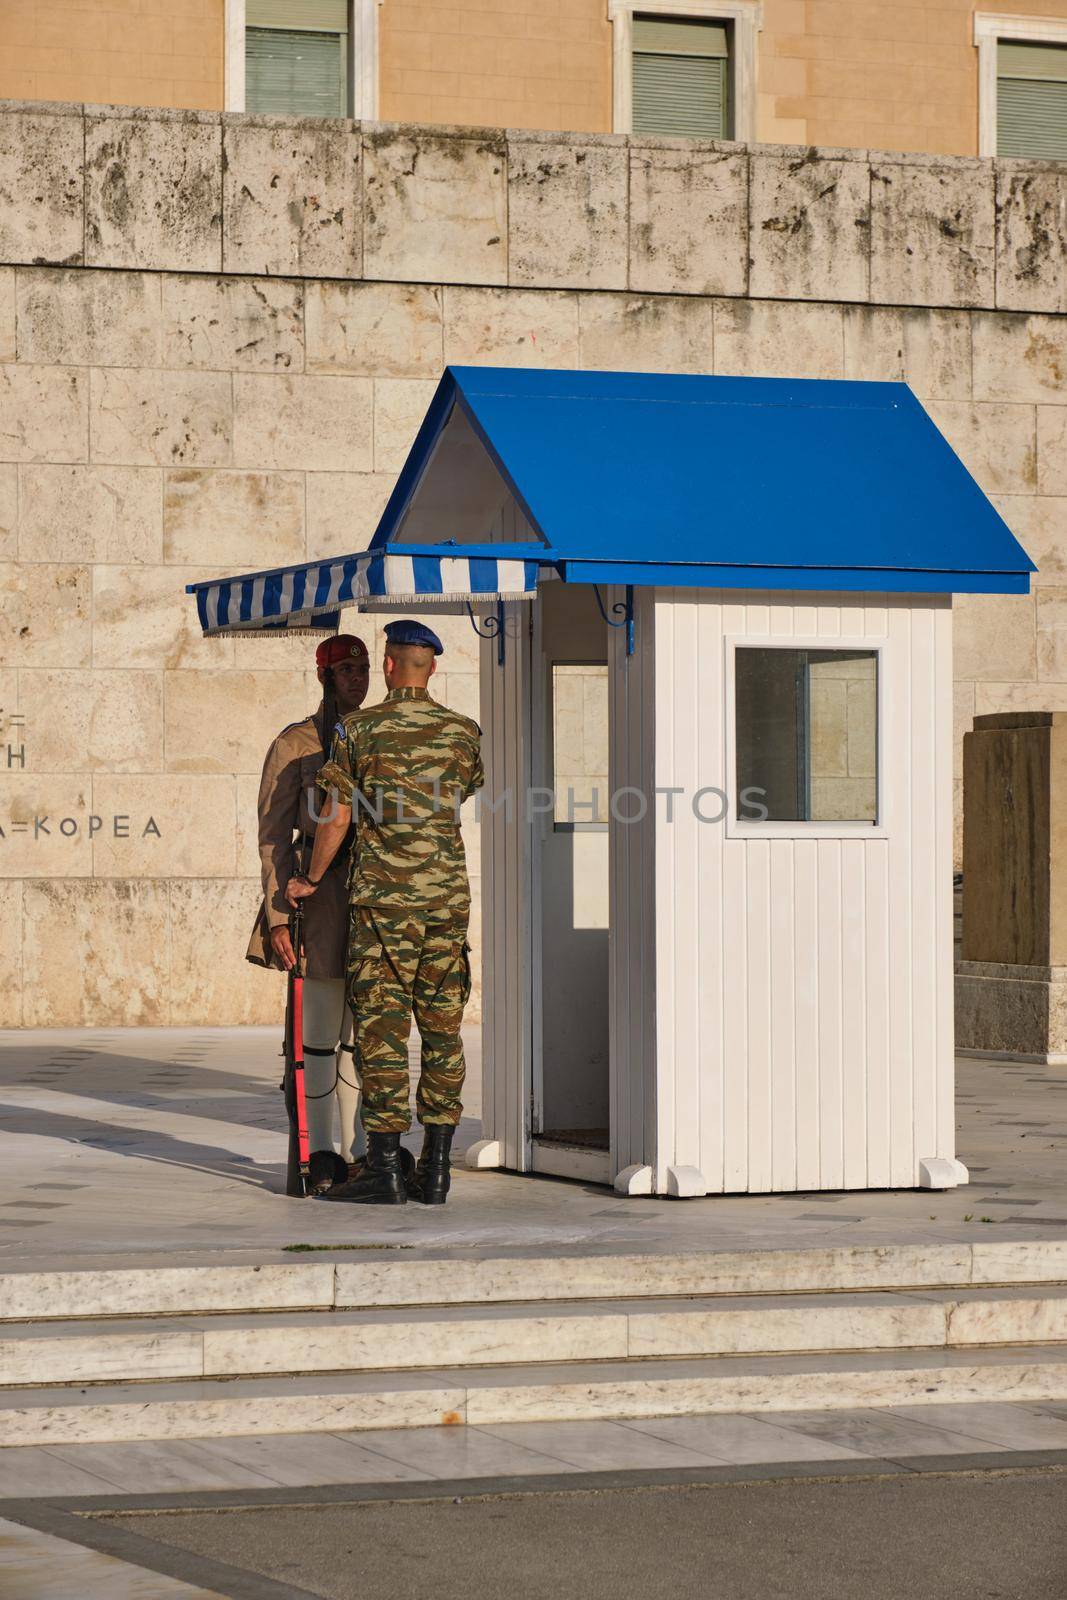 Presidential ceremonial guard Evzones, Syntagma square, Athens by dimol